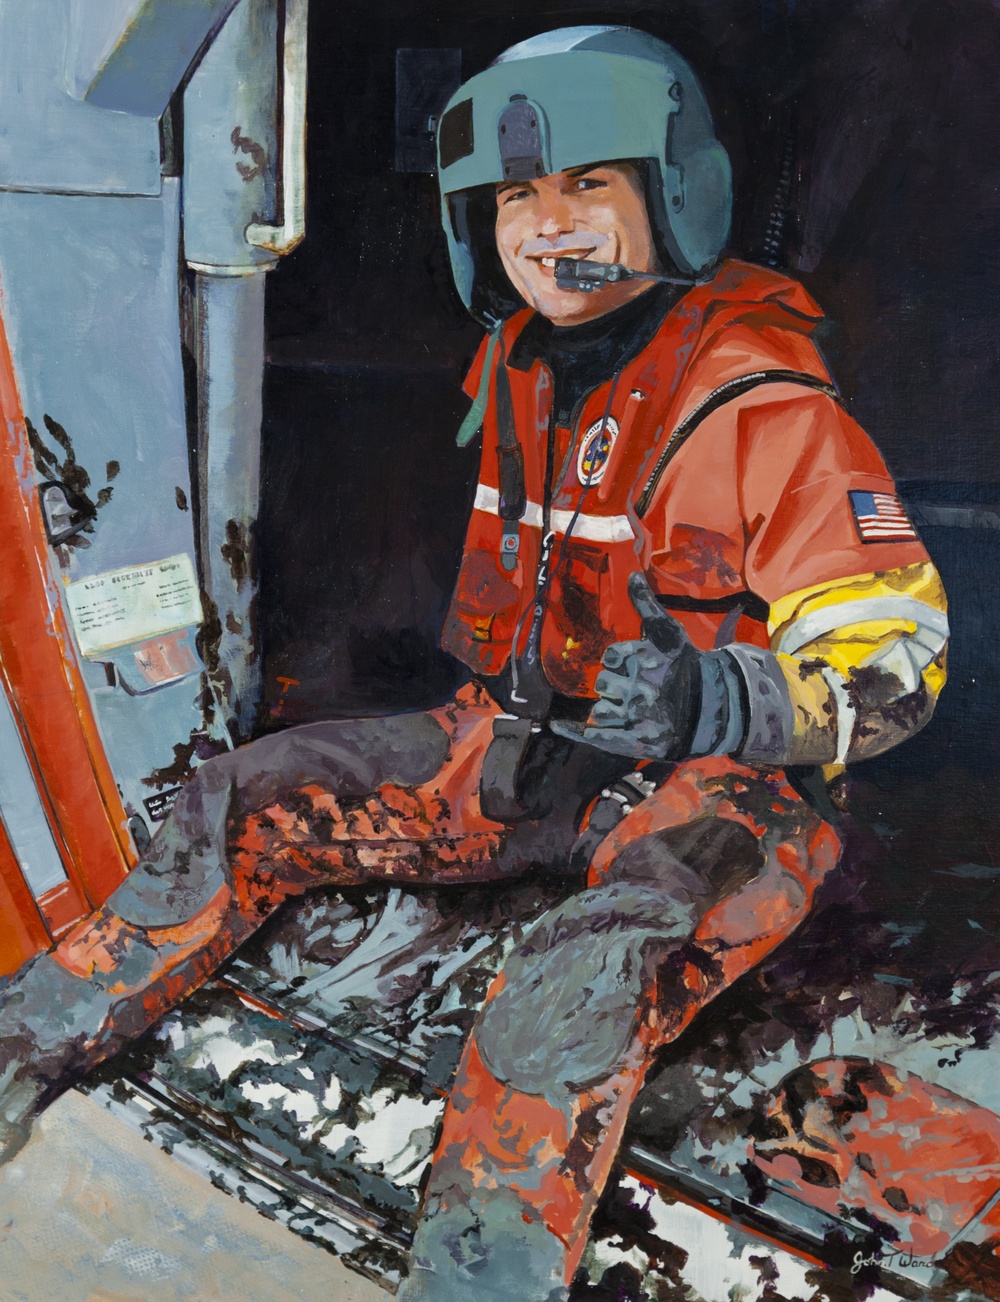 US Coast Guard Art Program 2015 Collection, 'Muddy Rescue'